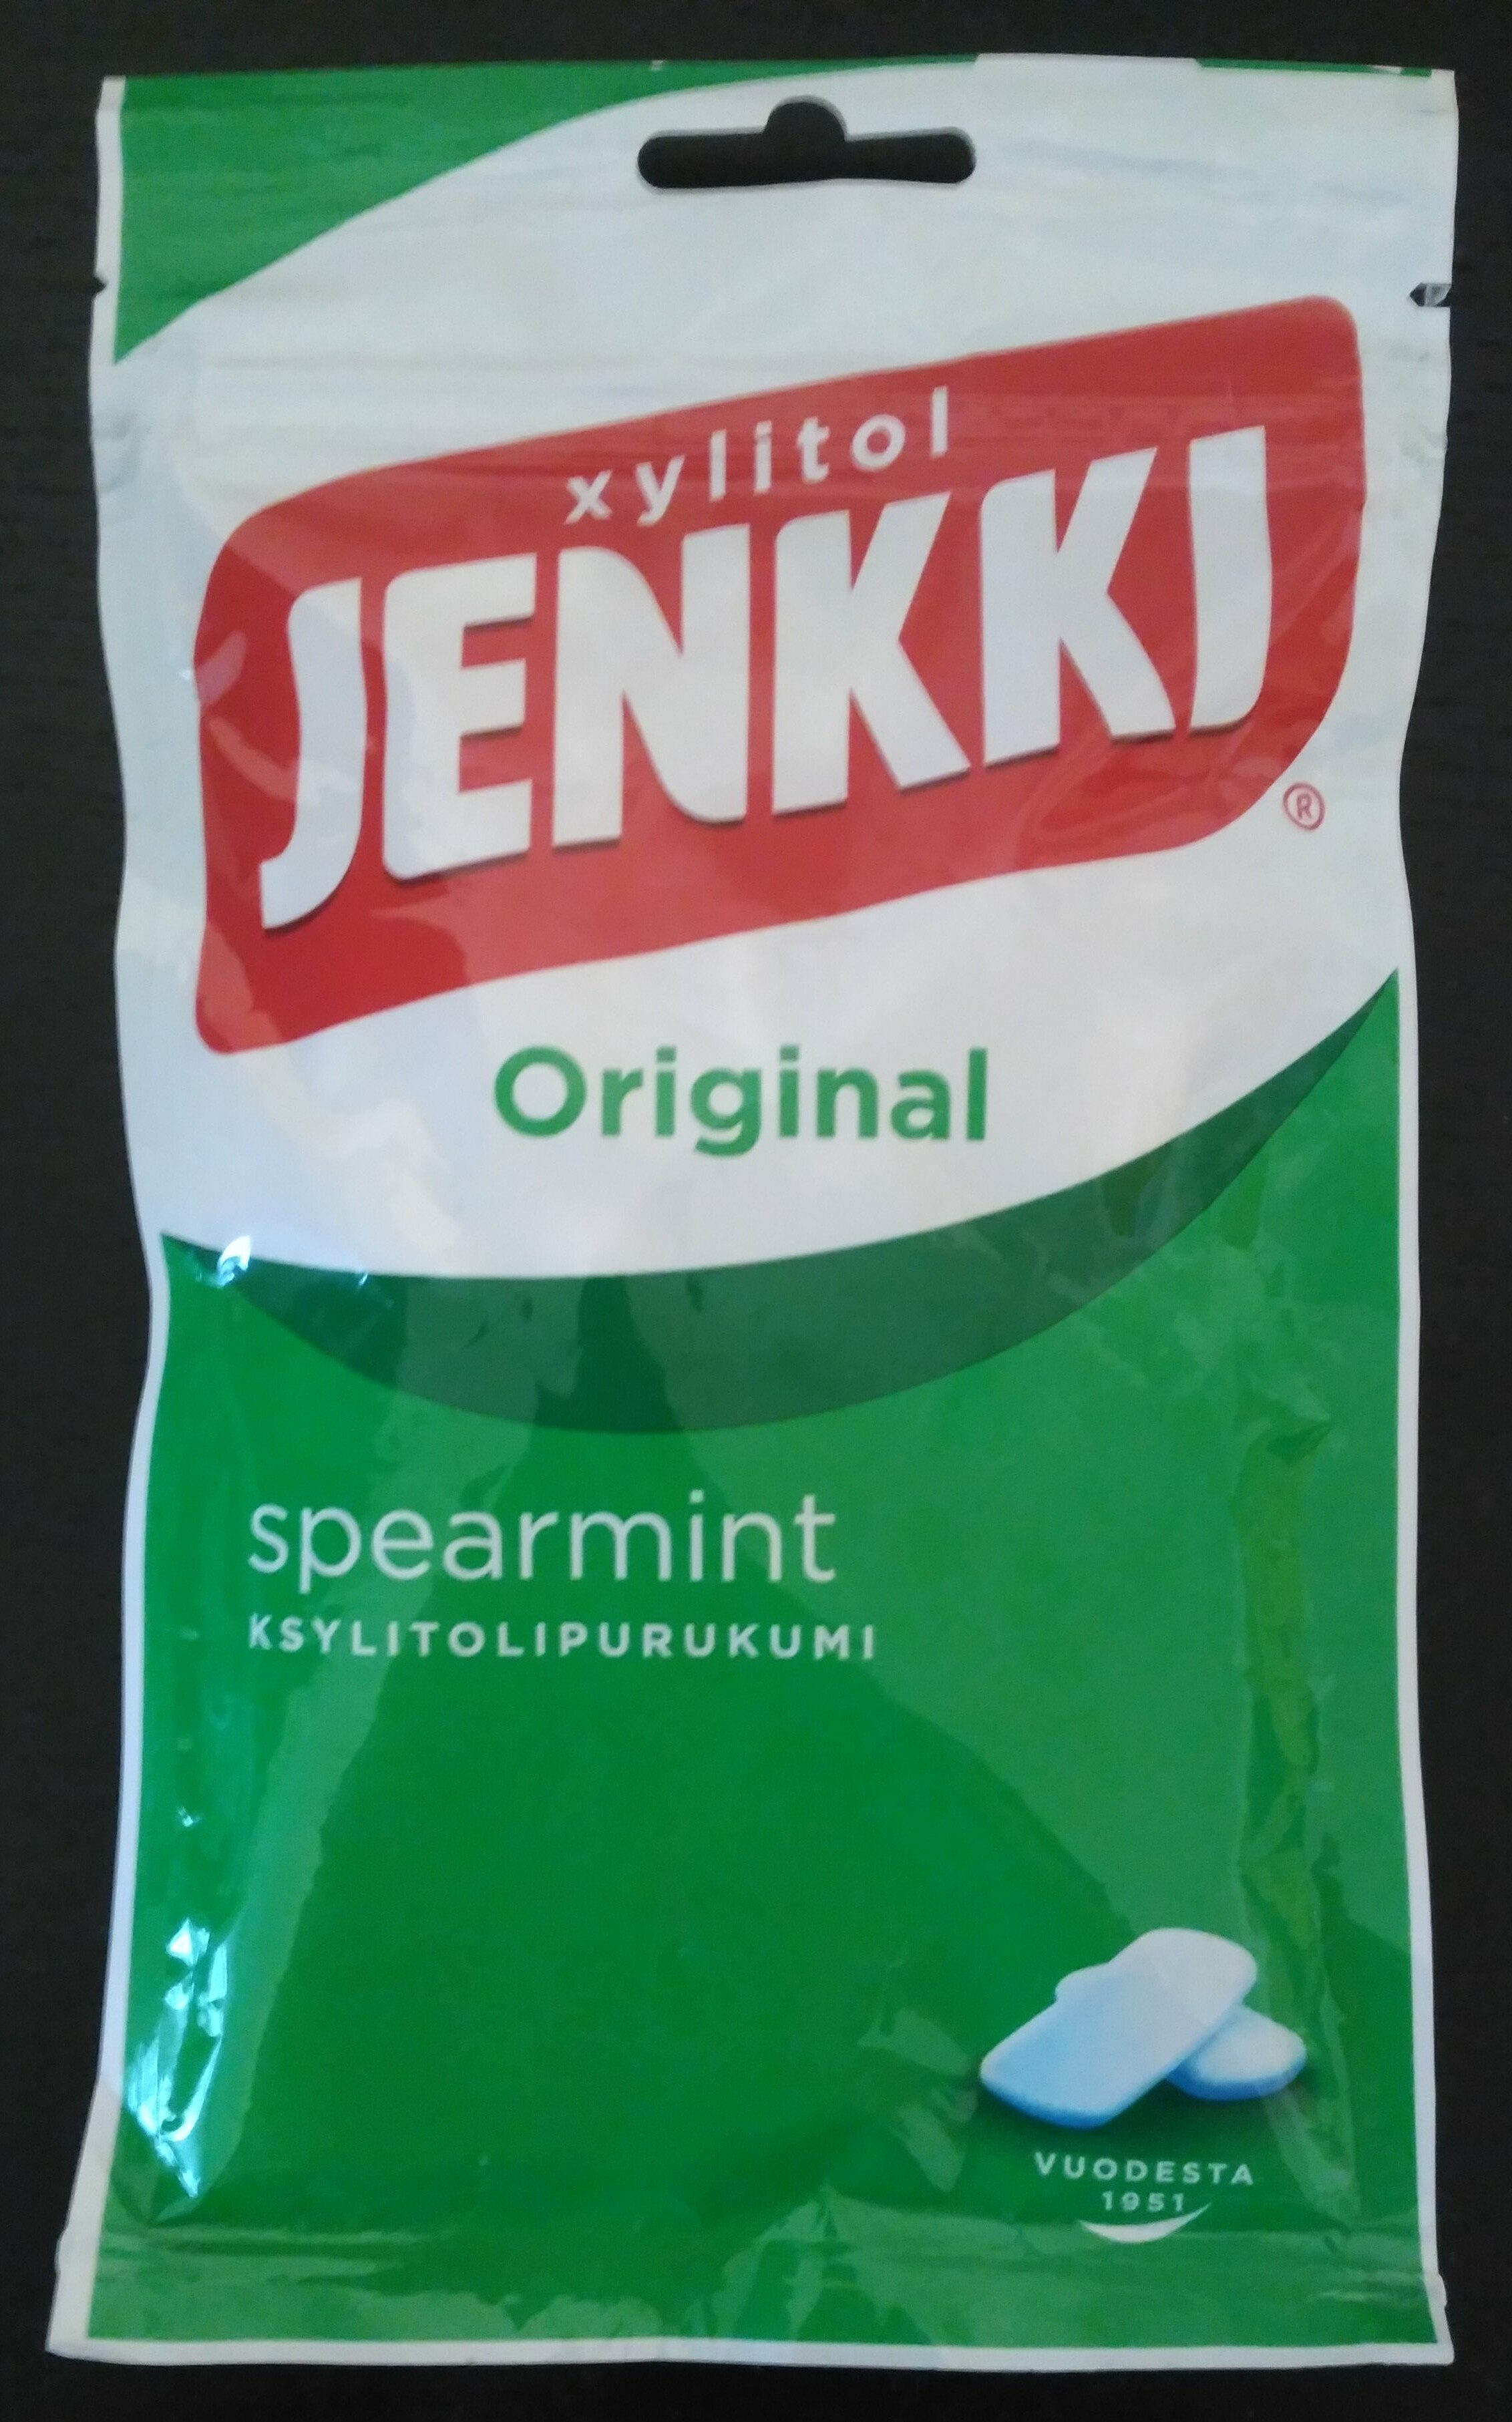 Jenkki Original Spearmint - Produkt - fi